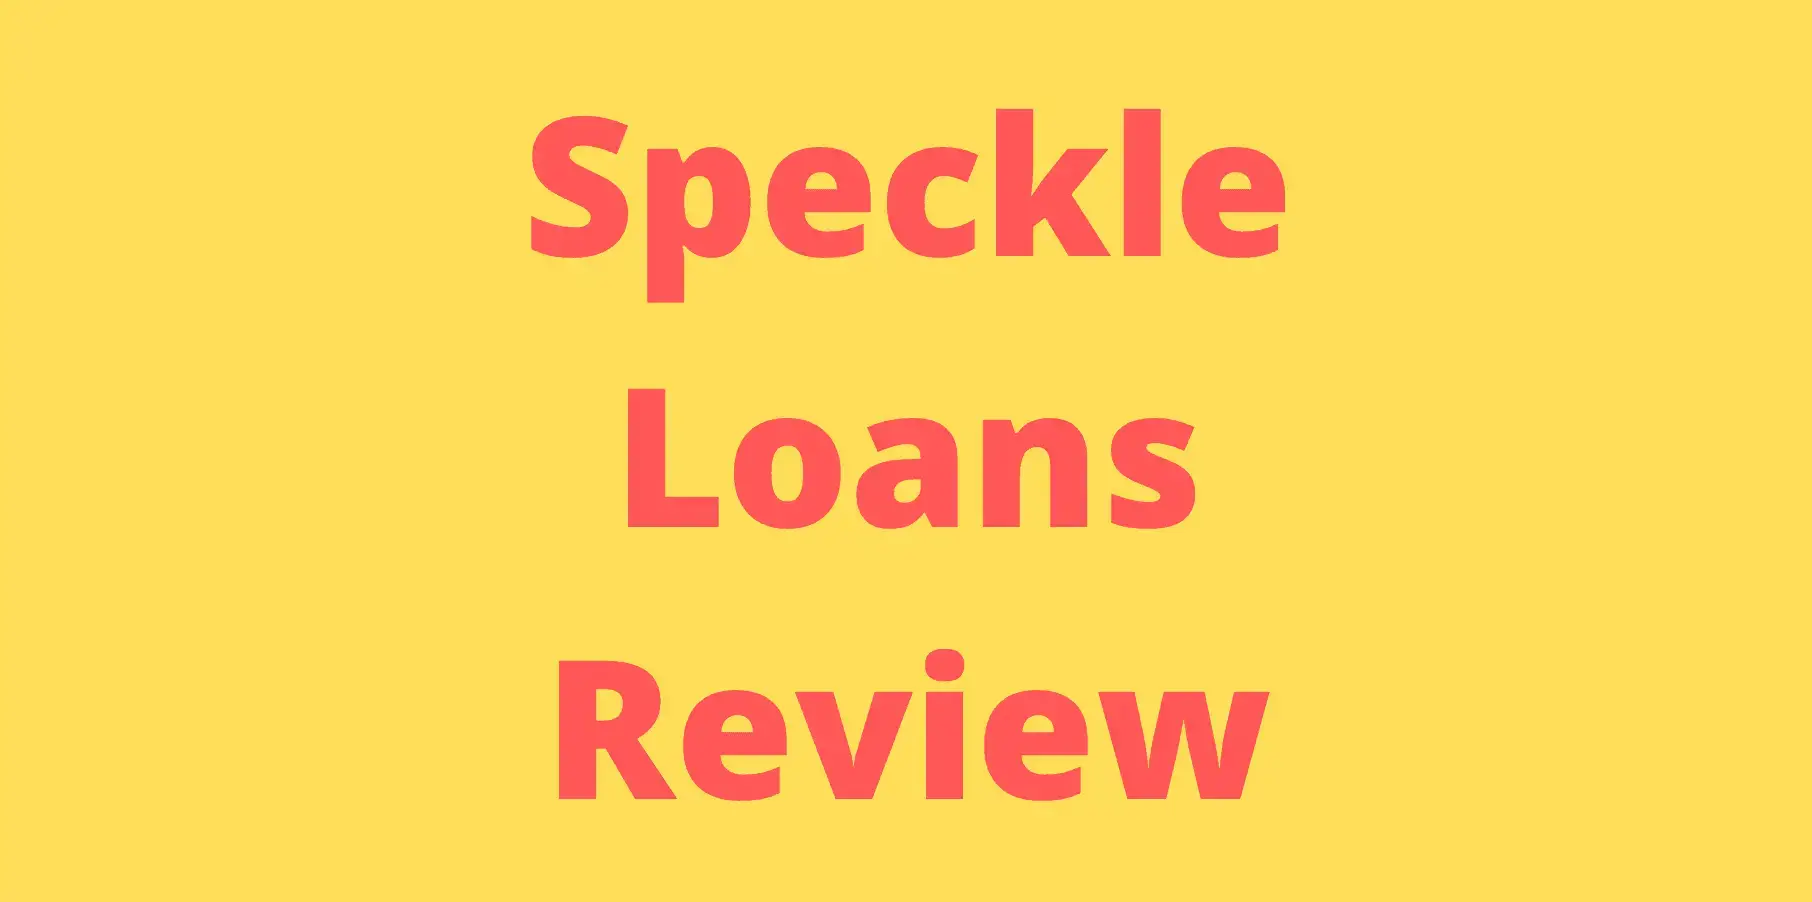 Speckle Loans